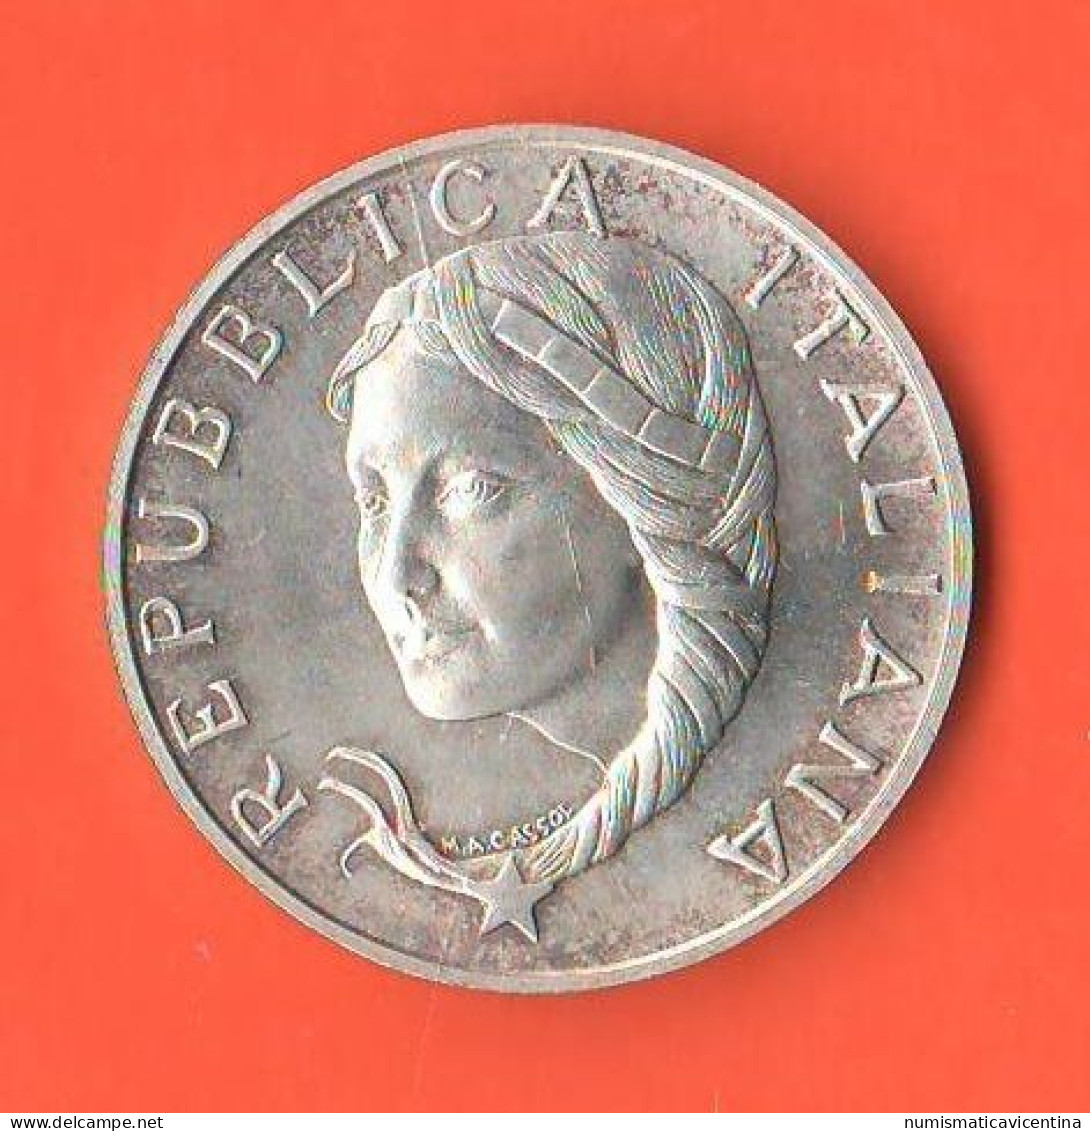 Italia 5000 Lire 1996 Presidenza Cee Italian Presidency European Union Italy Italie Silver Coin - Commémoratives